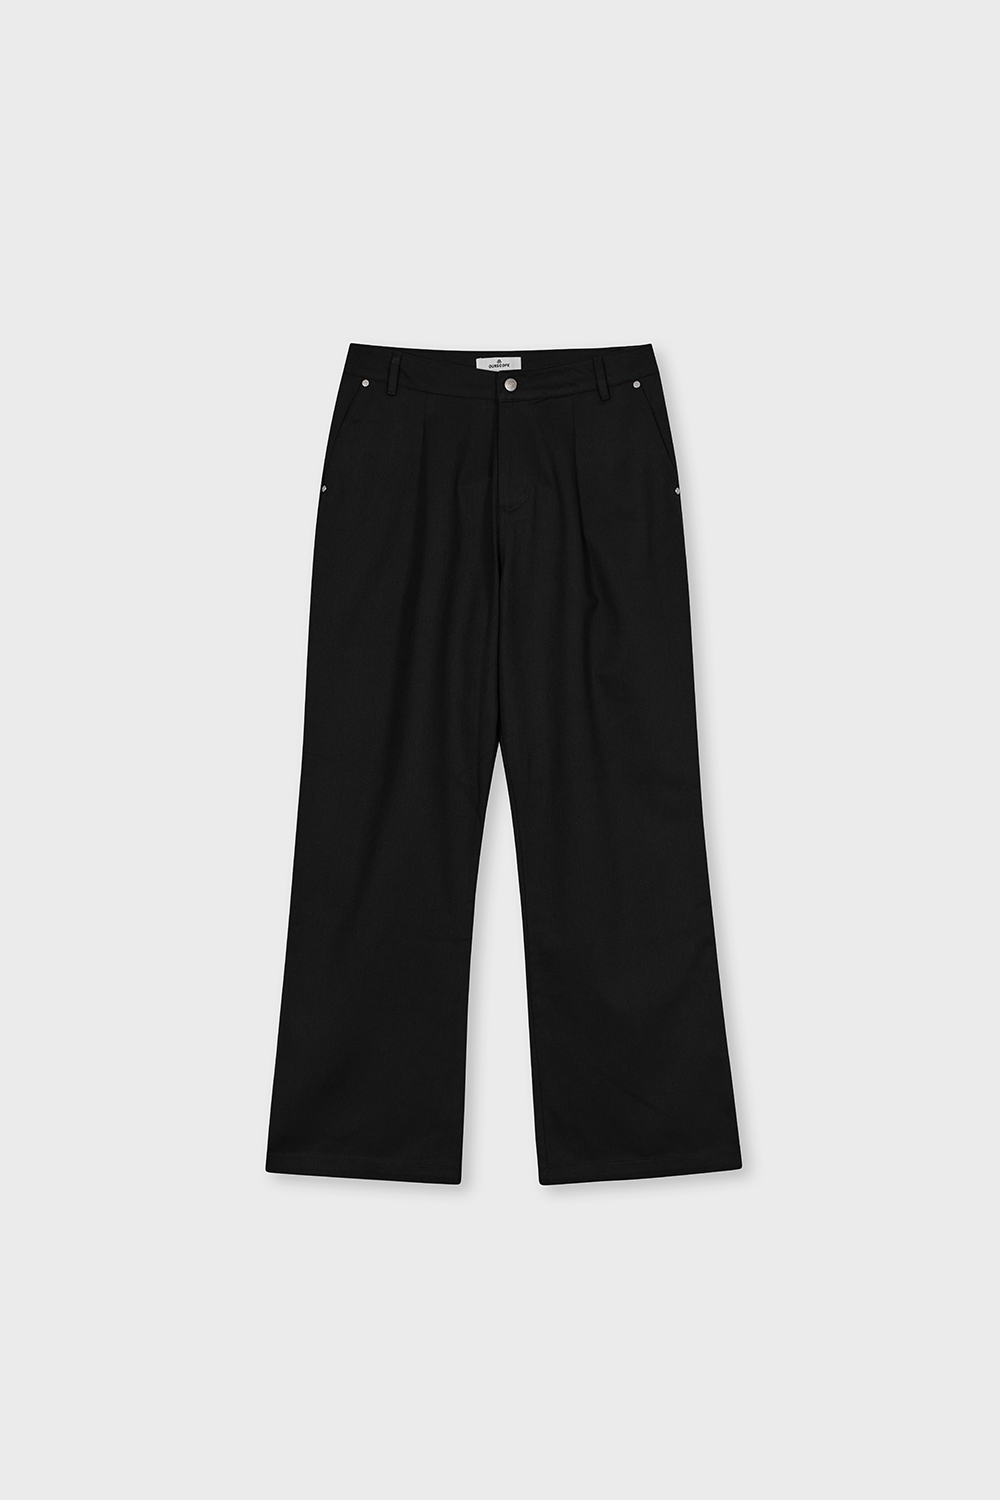 MEZO One-tuck Pants (Black)